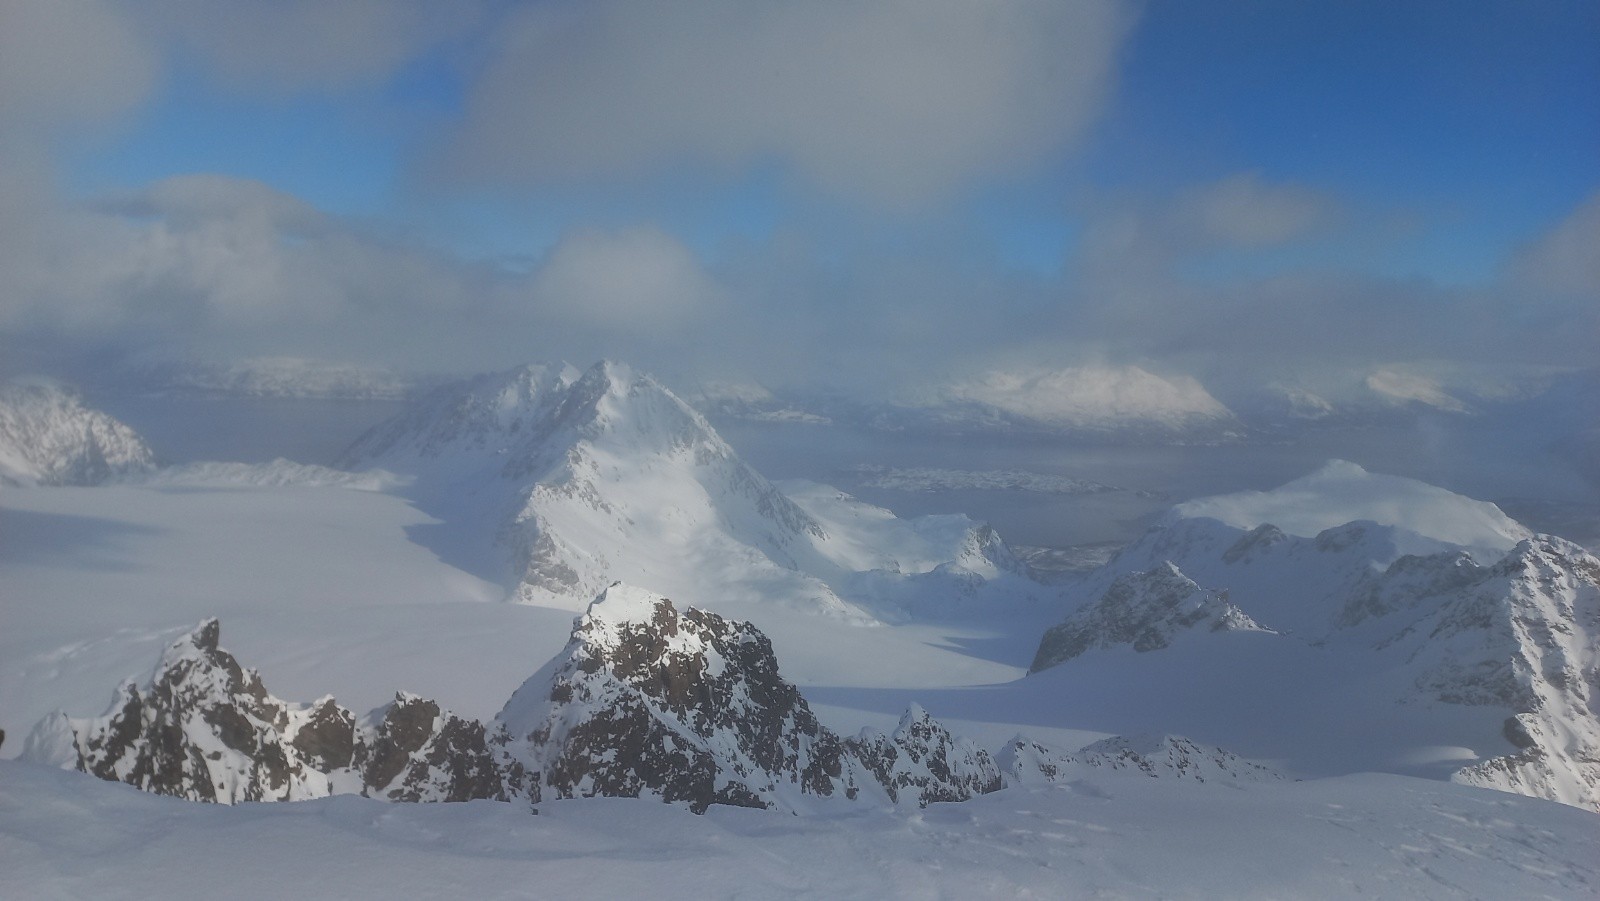  Les 2 glaciers (Strupbreen et Koppangsbreen depuis le sommet du Tafeltinden